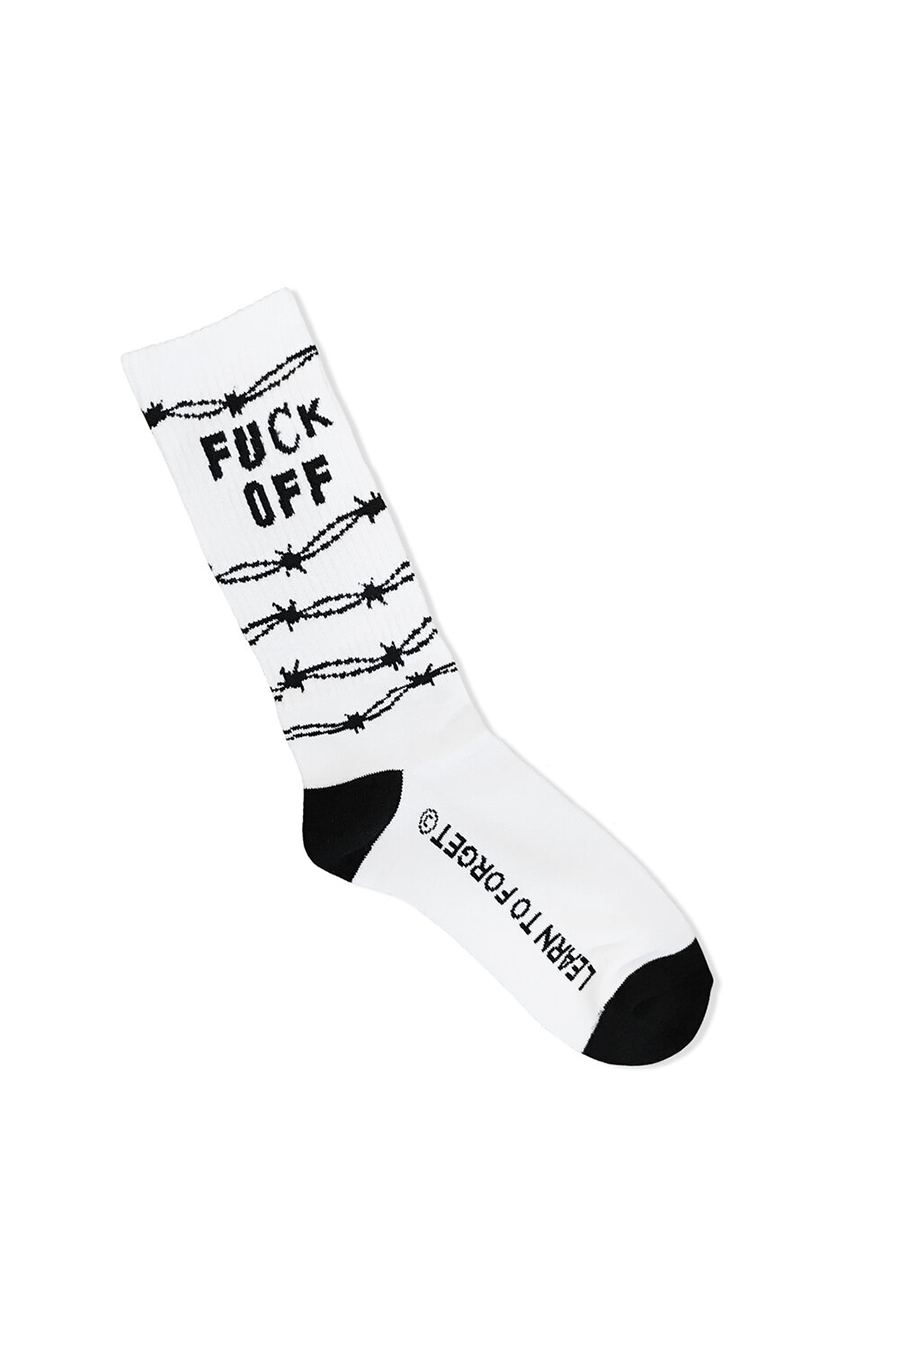 Fuck Off Socks | White - Main Image Number 1 of 1